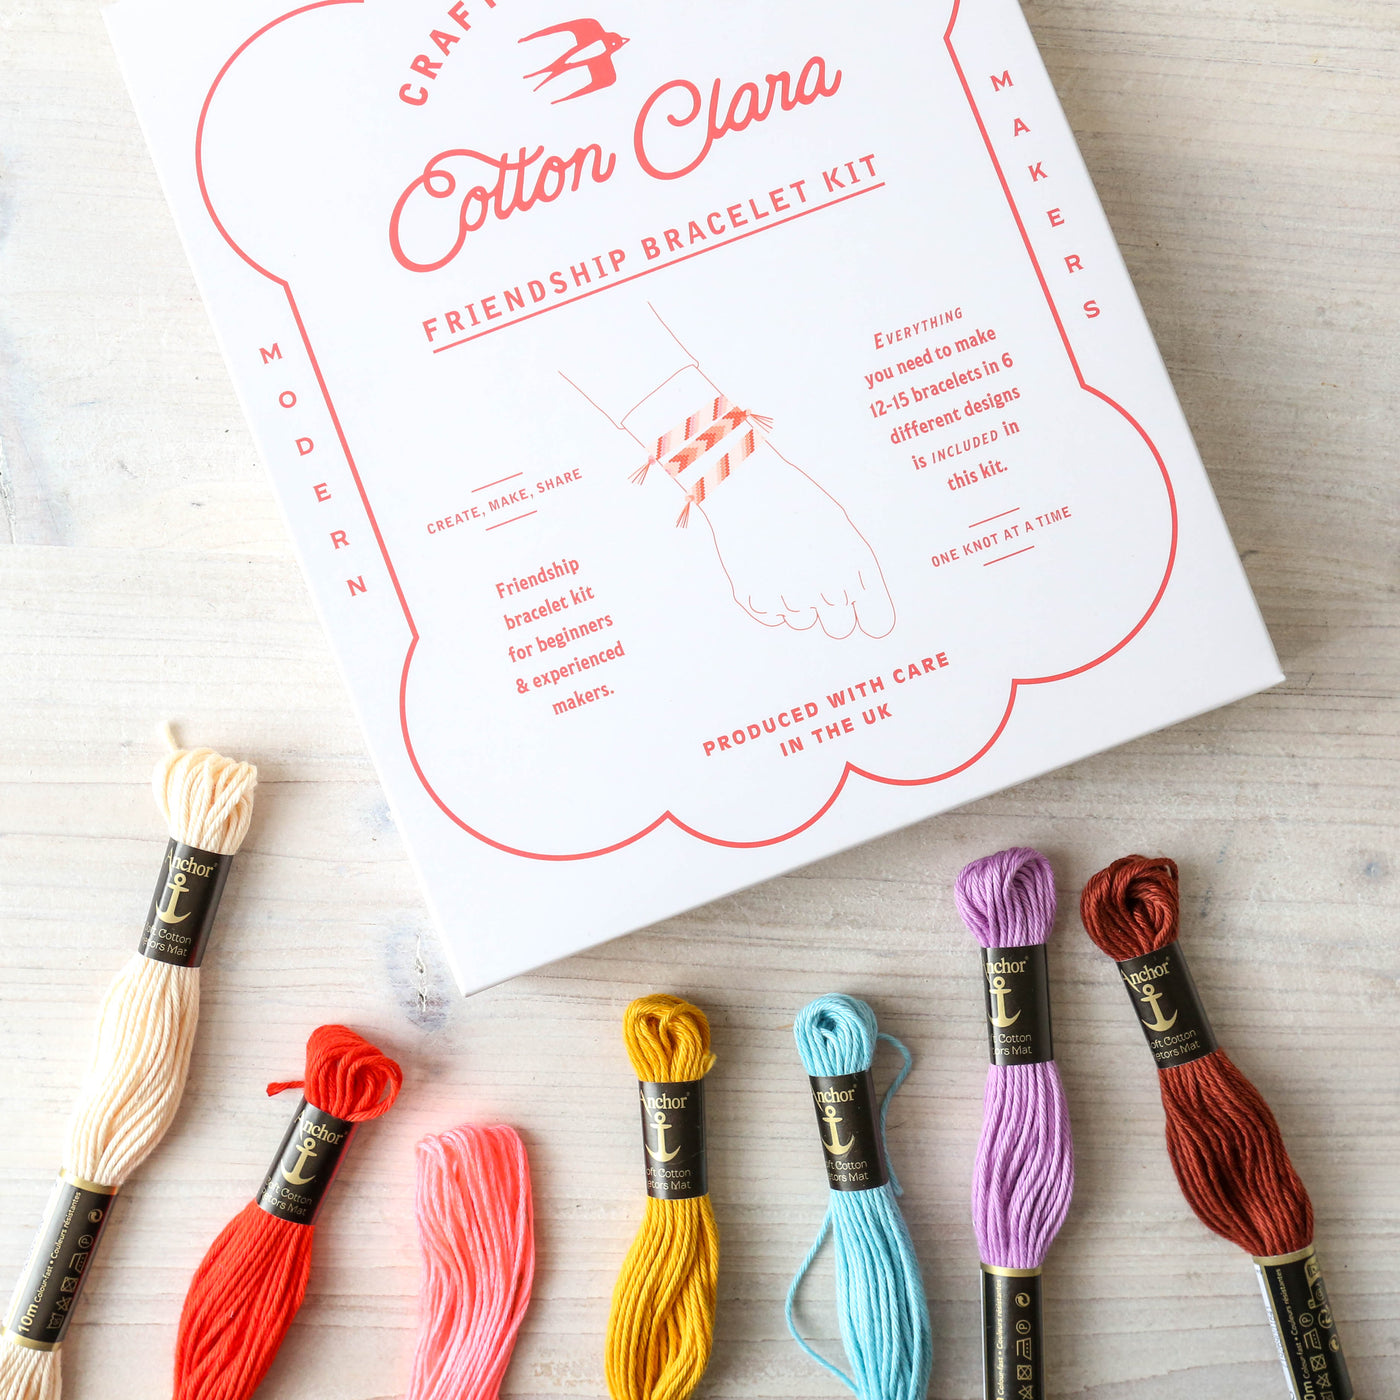 Cotton Clara Friendship Bracelets Craft Kit